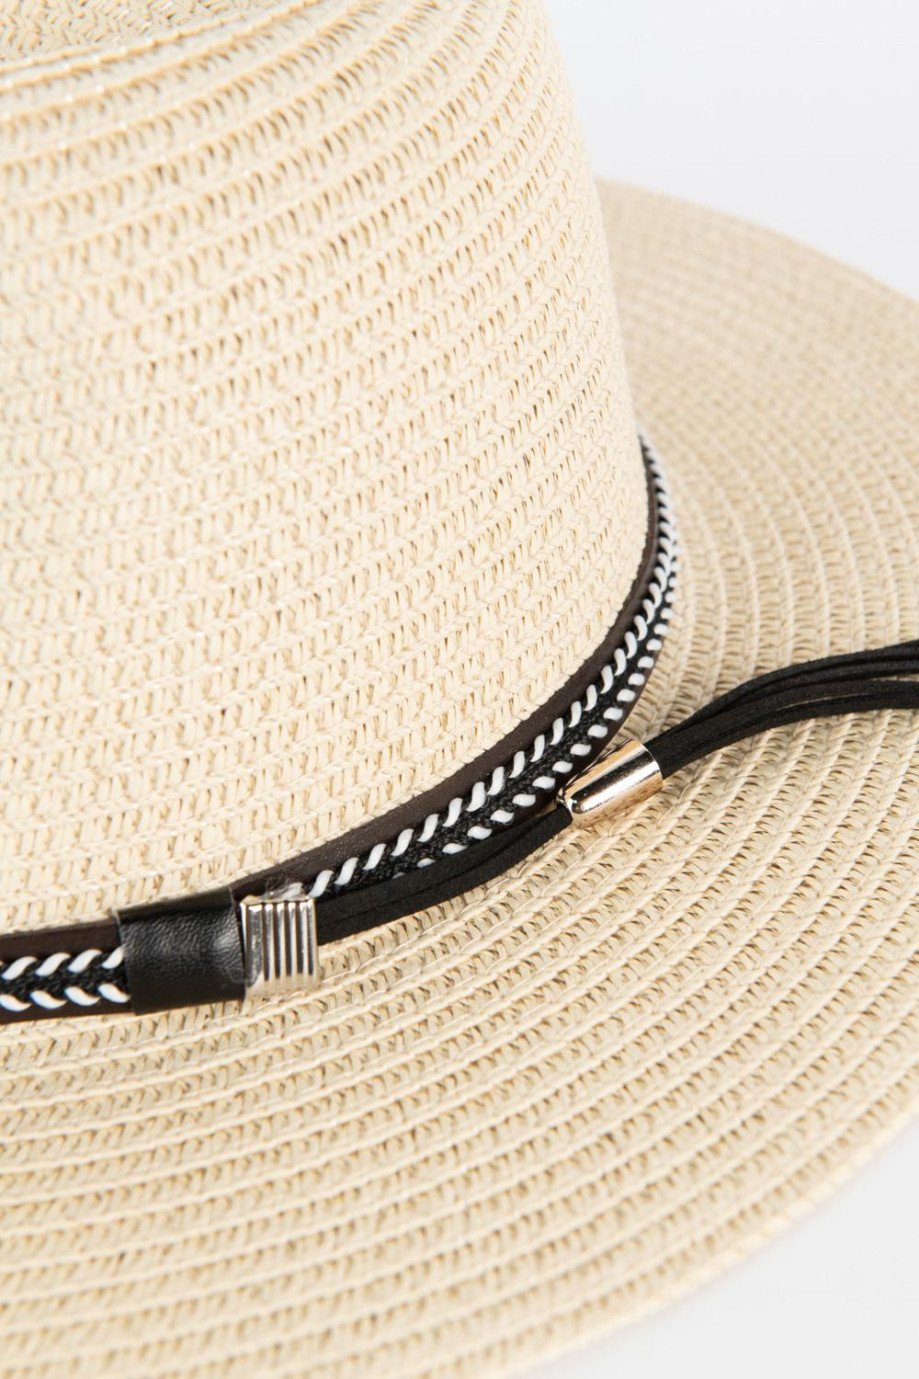 Sombrero de paja crema claro con lazo negro decorativo